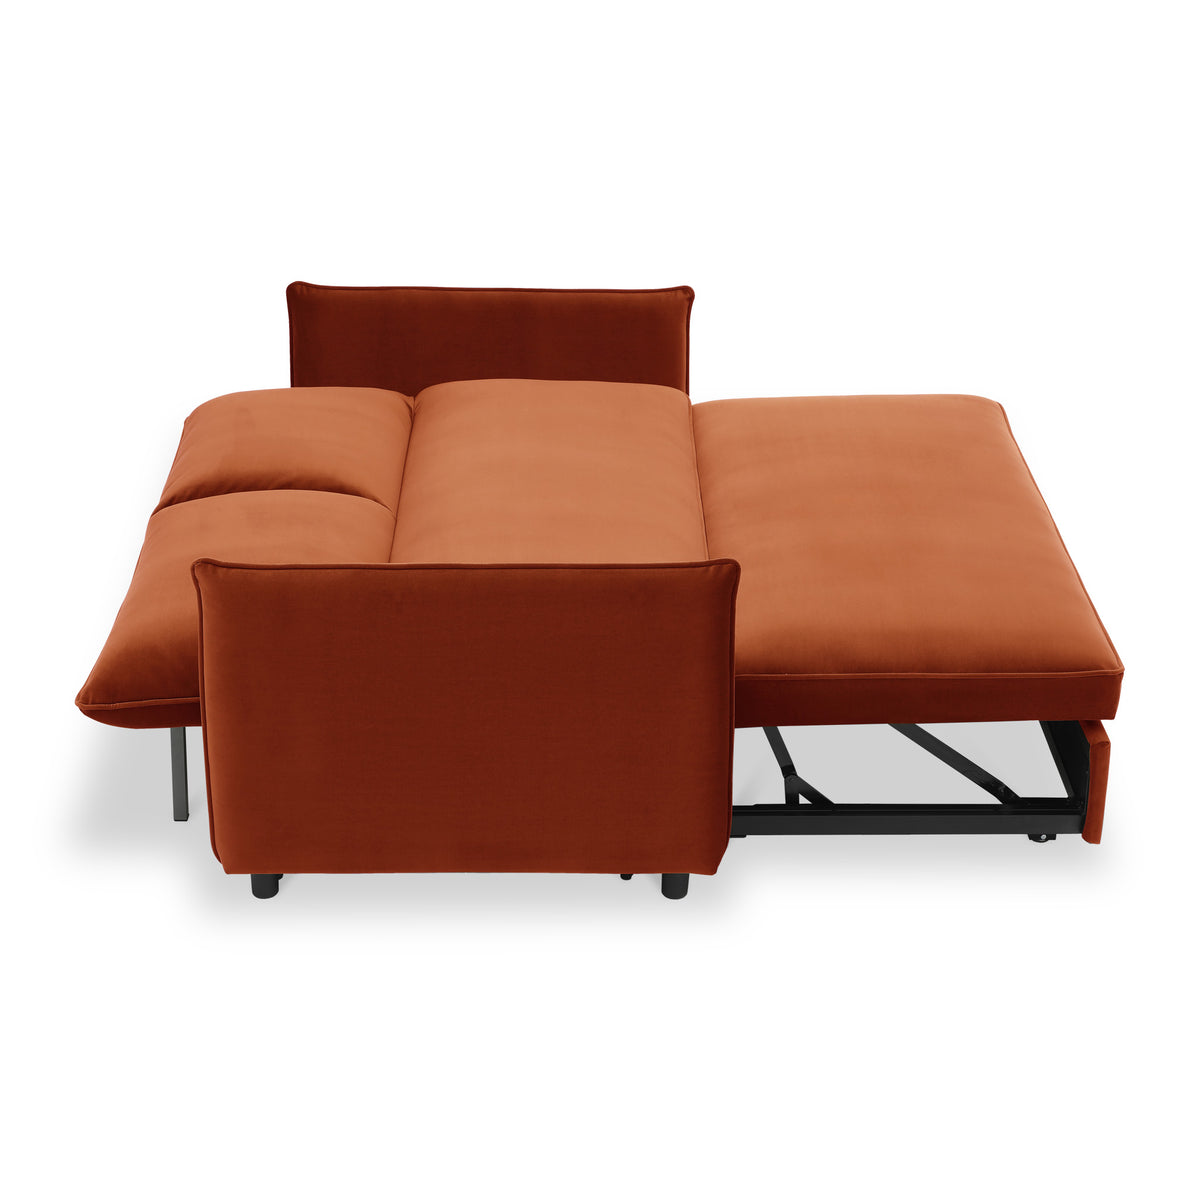 Thalia 2 Seater Burnt Orange Pop Up Sofa Bed by Roseland Furniture